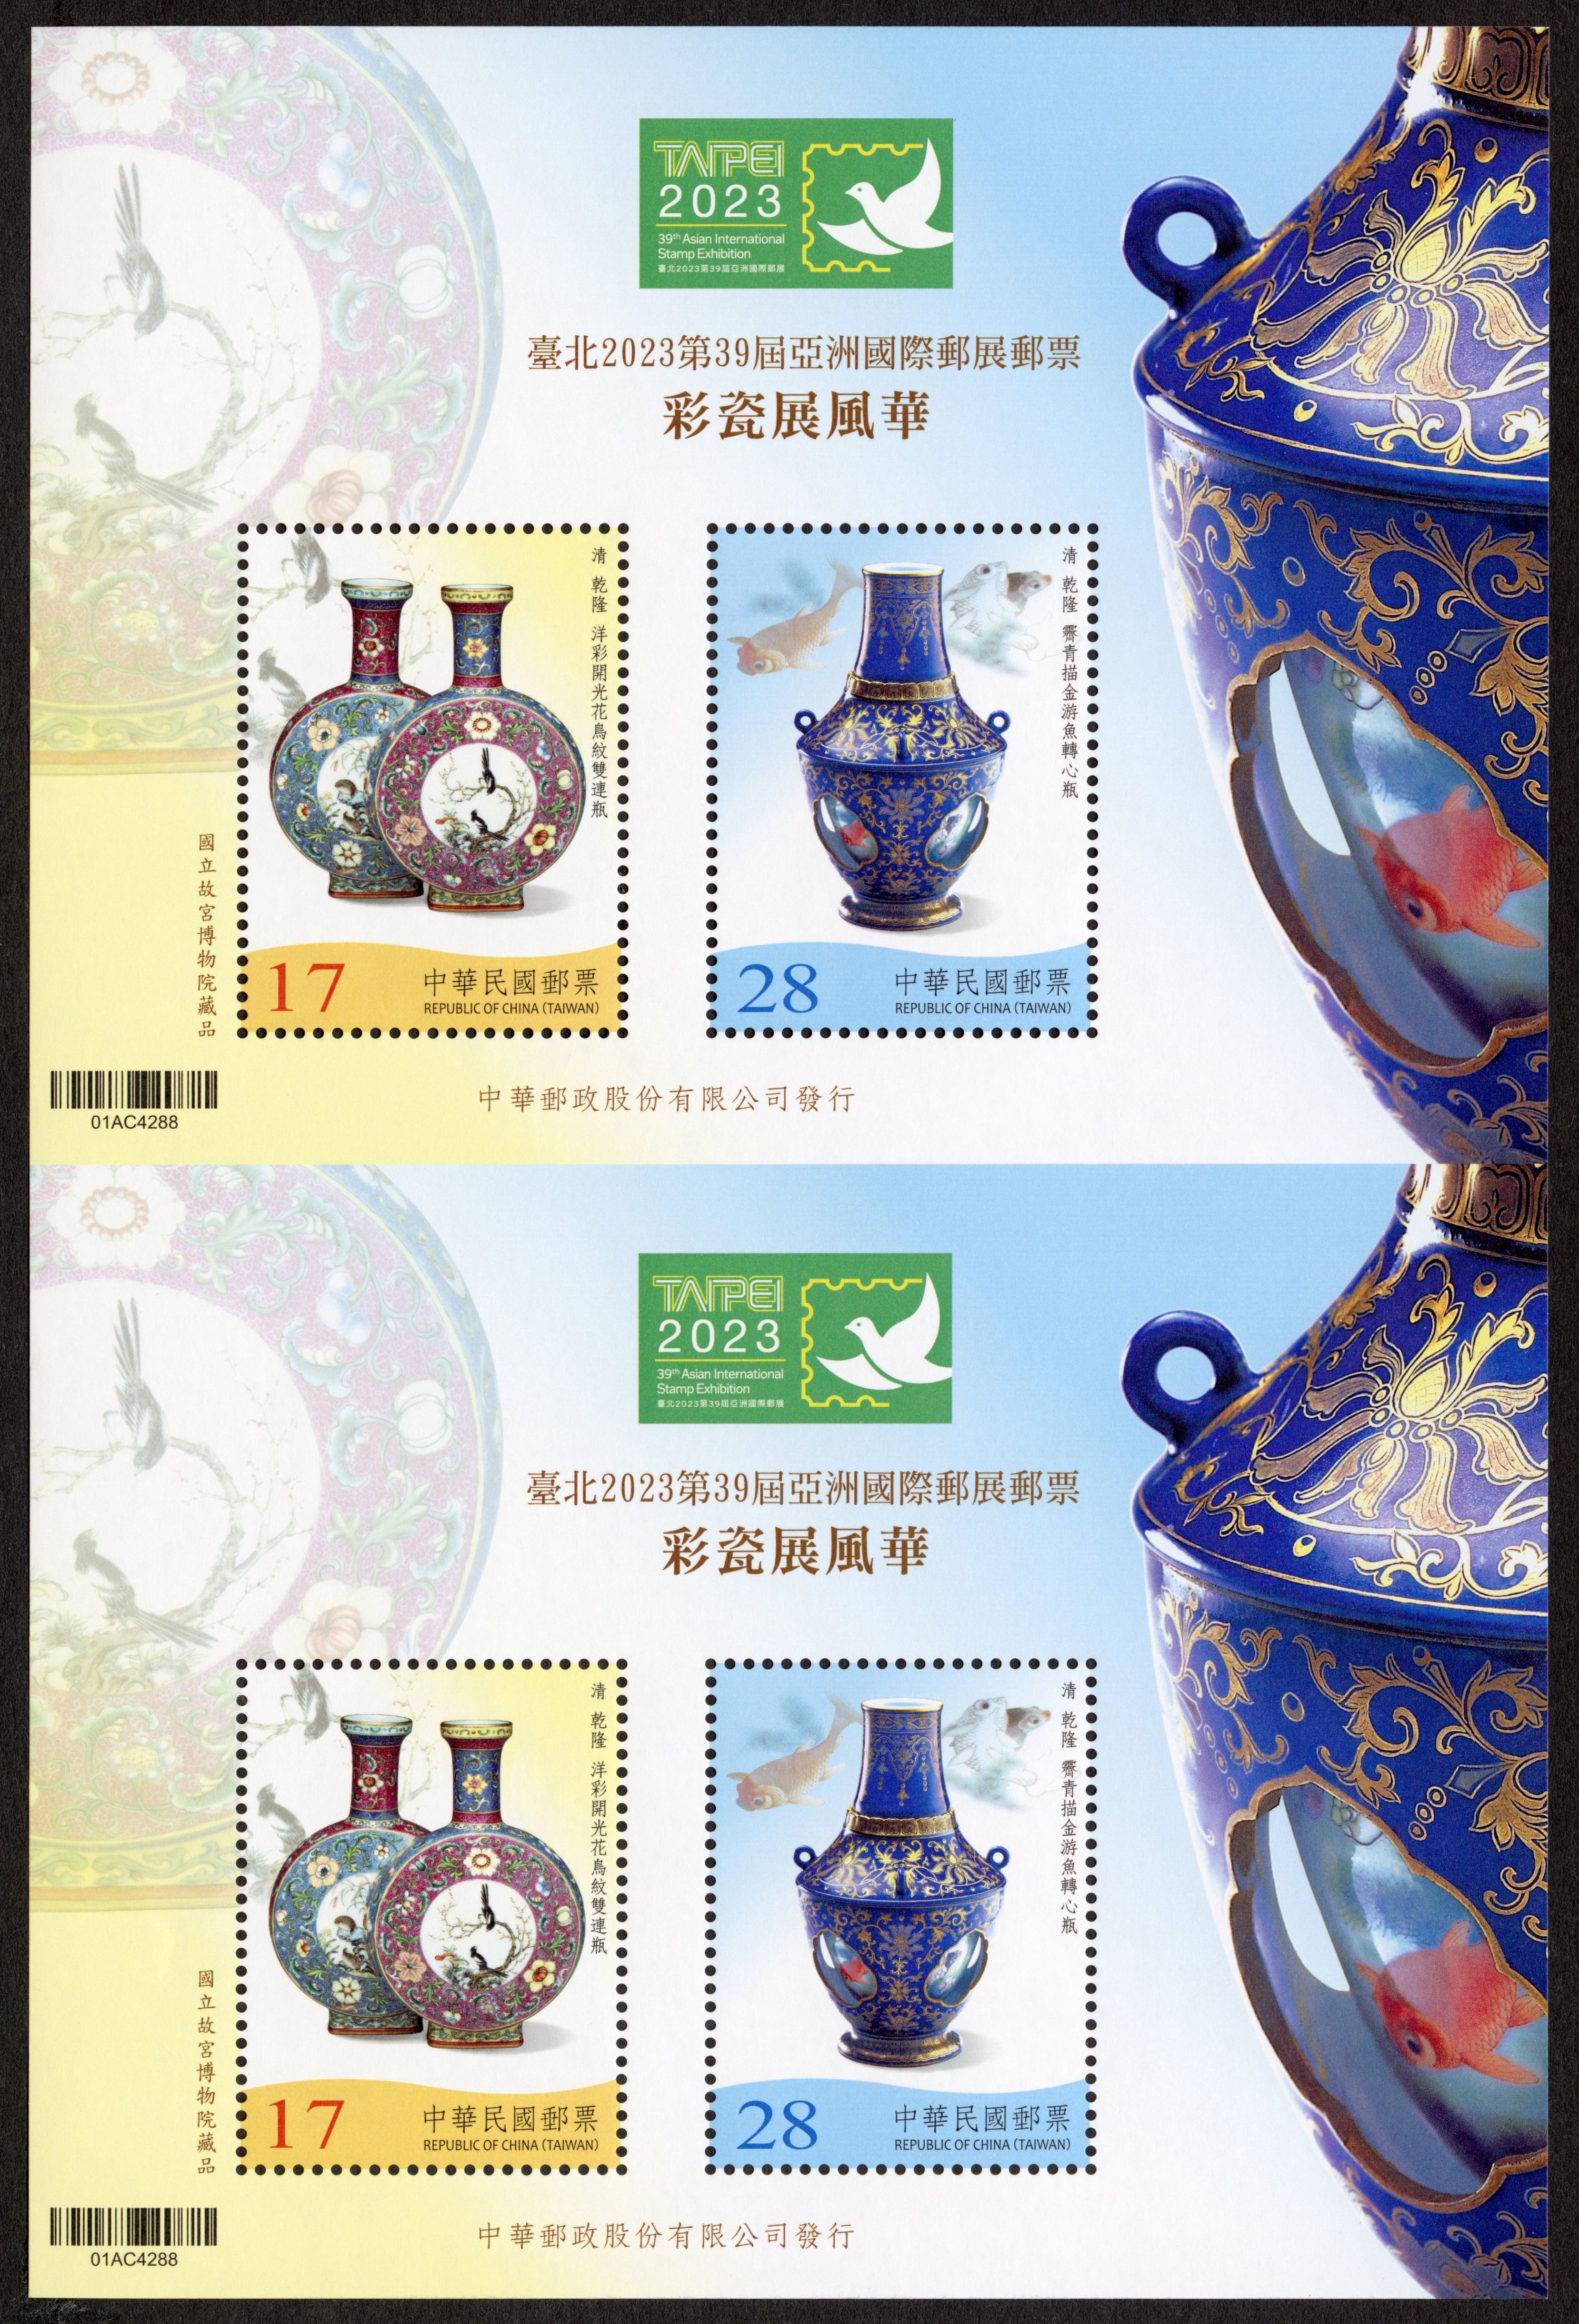 TAIPEI 2023 – 39th Asian International Stamp Exhibition Souvenir Sheet: Colorful Porcelain